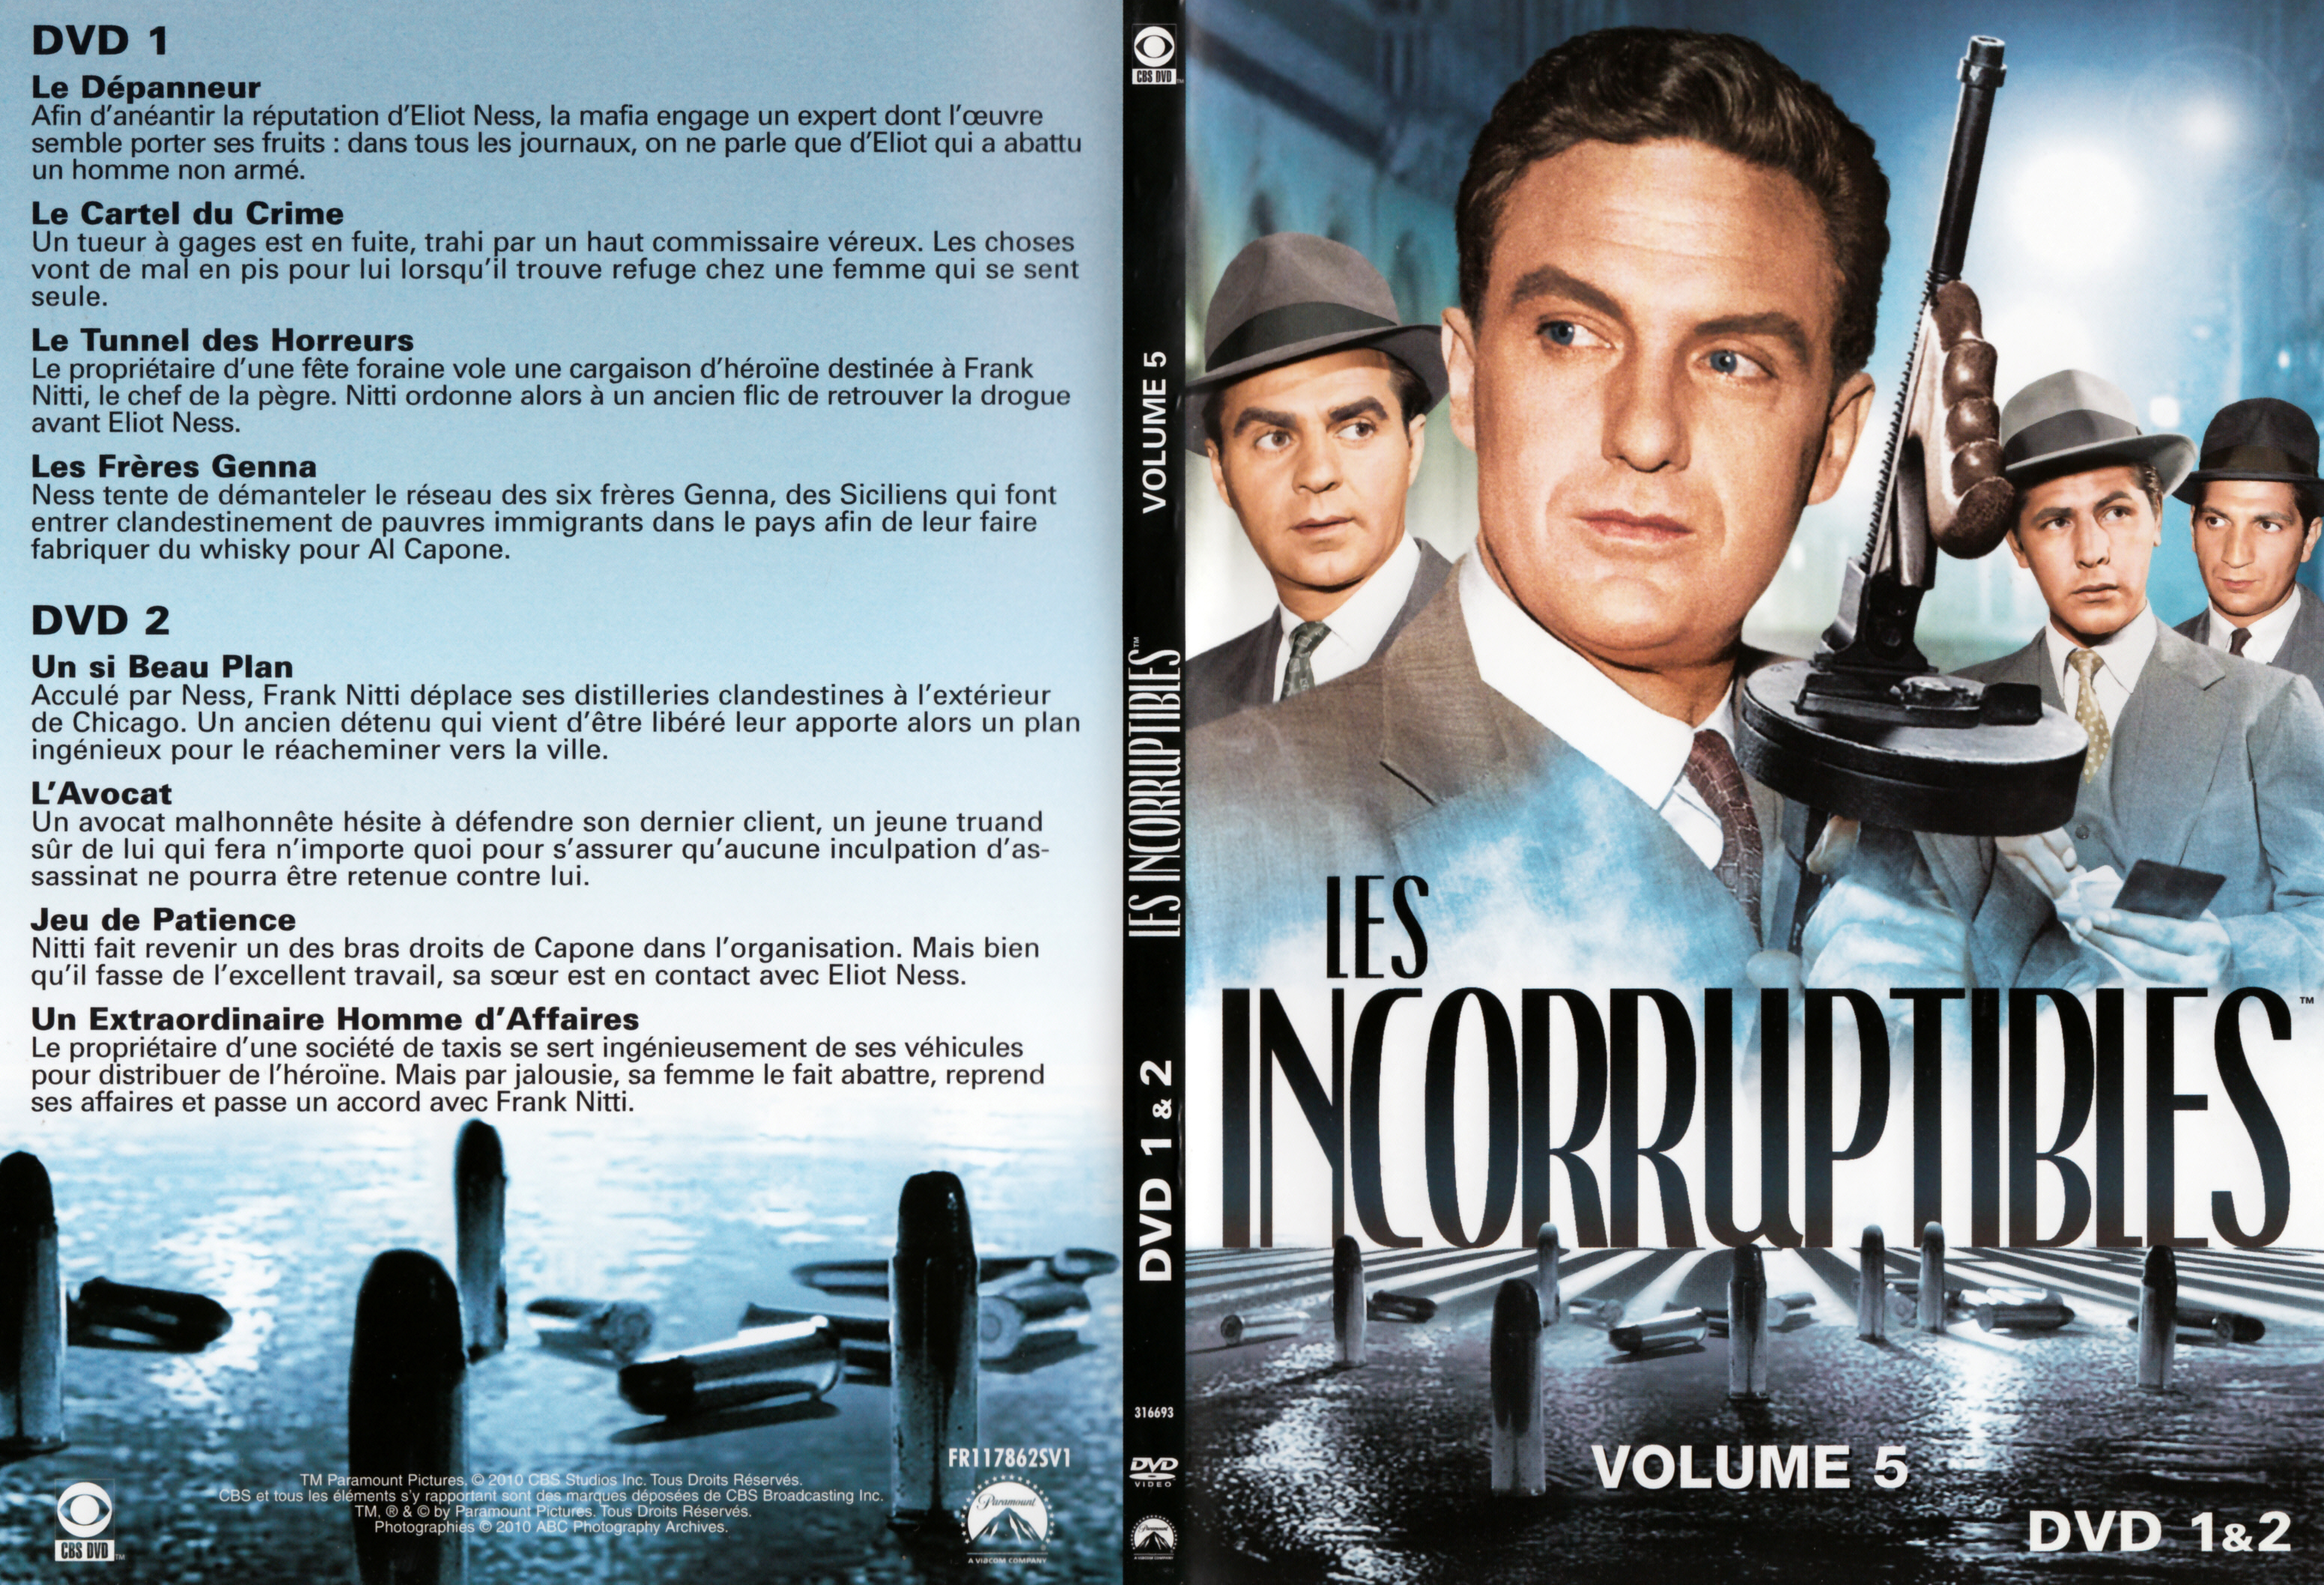 Jaquette DVD Les incorruptibles vol 05 DVD 1